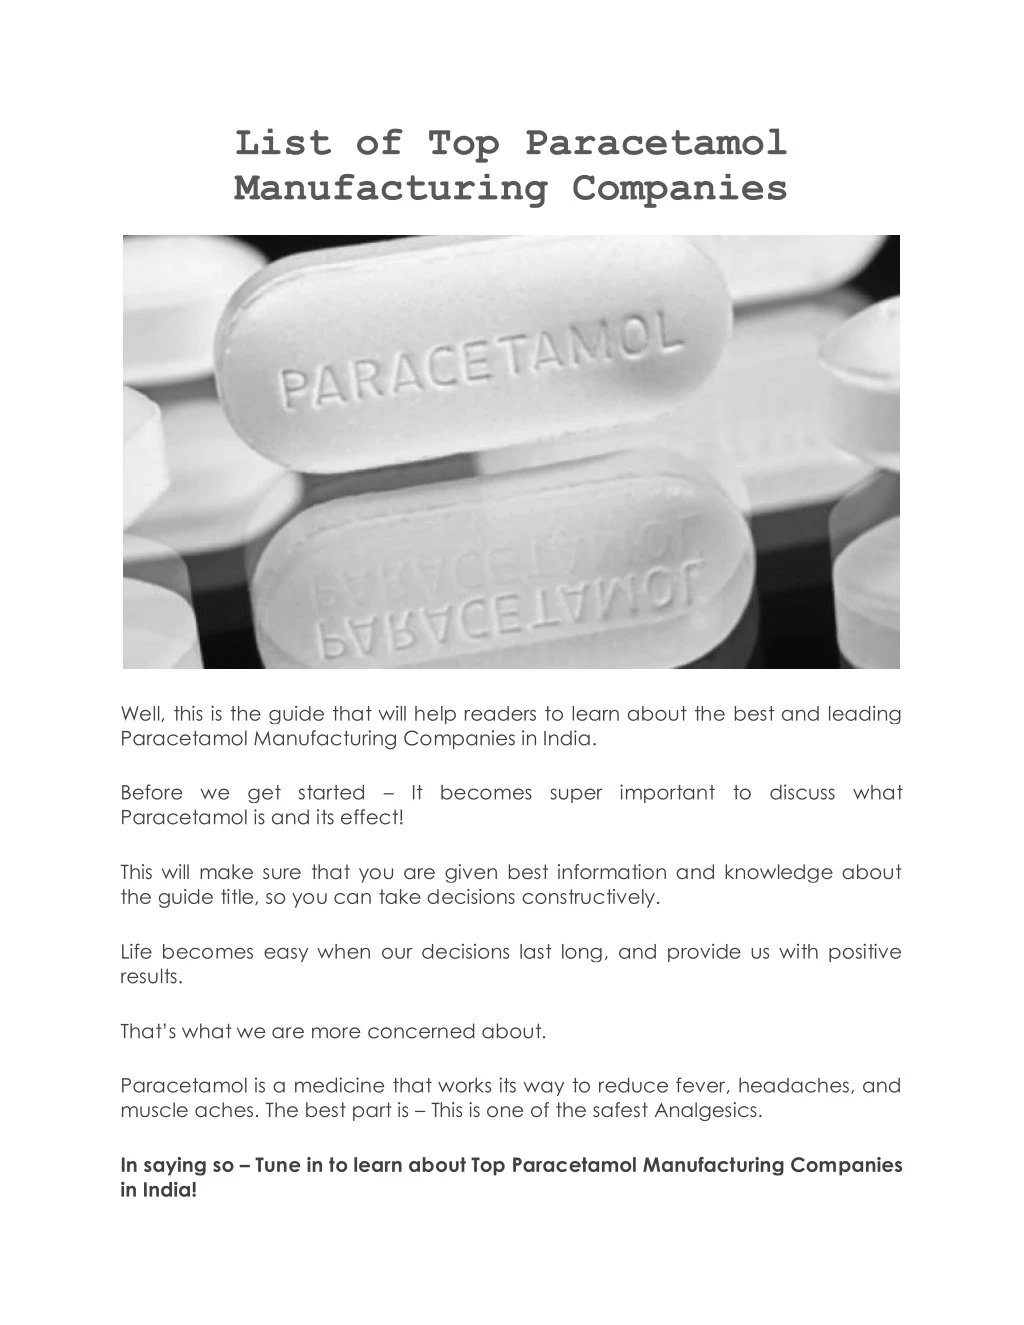 list of top paracetamol manufacturing companies